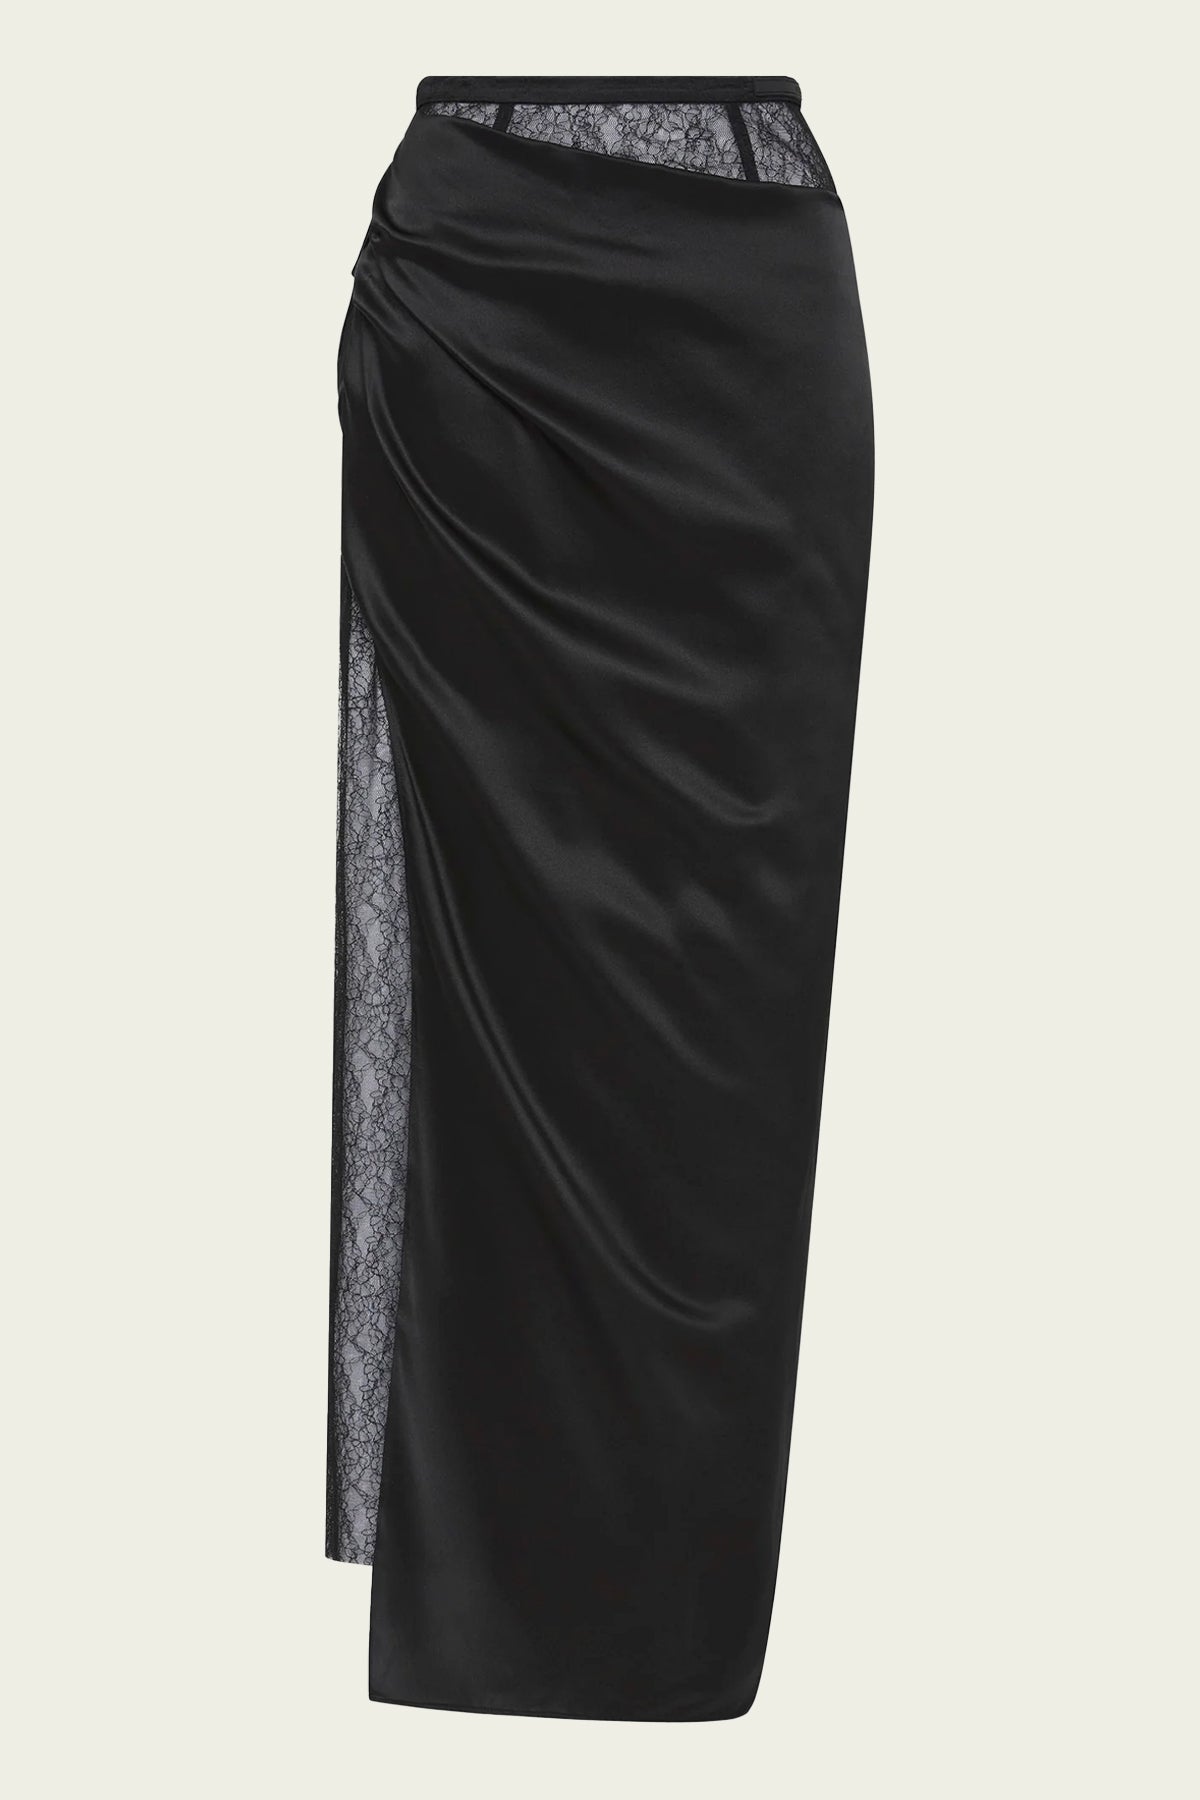 Dunya Draped Skirt in Black - shop - olivia.com